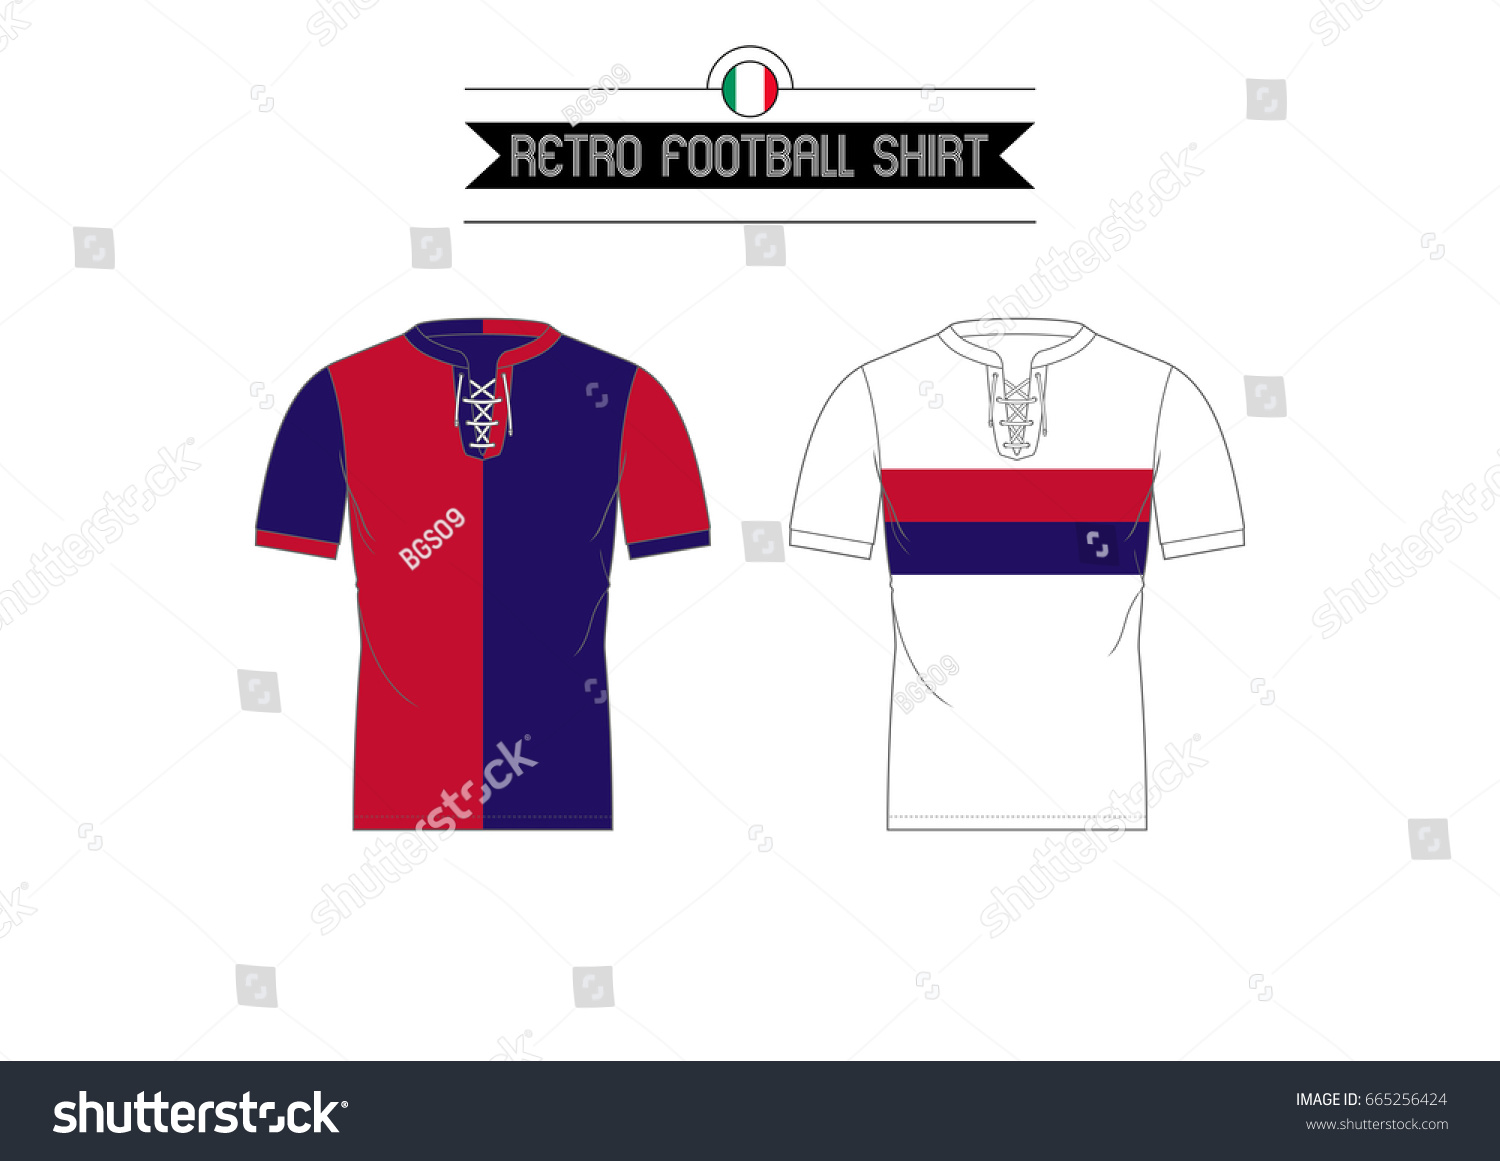 italian club football shirts